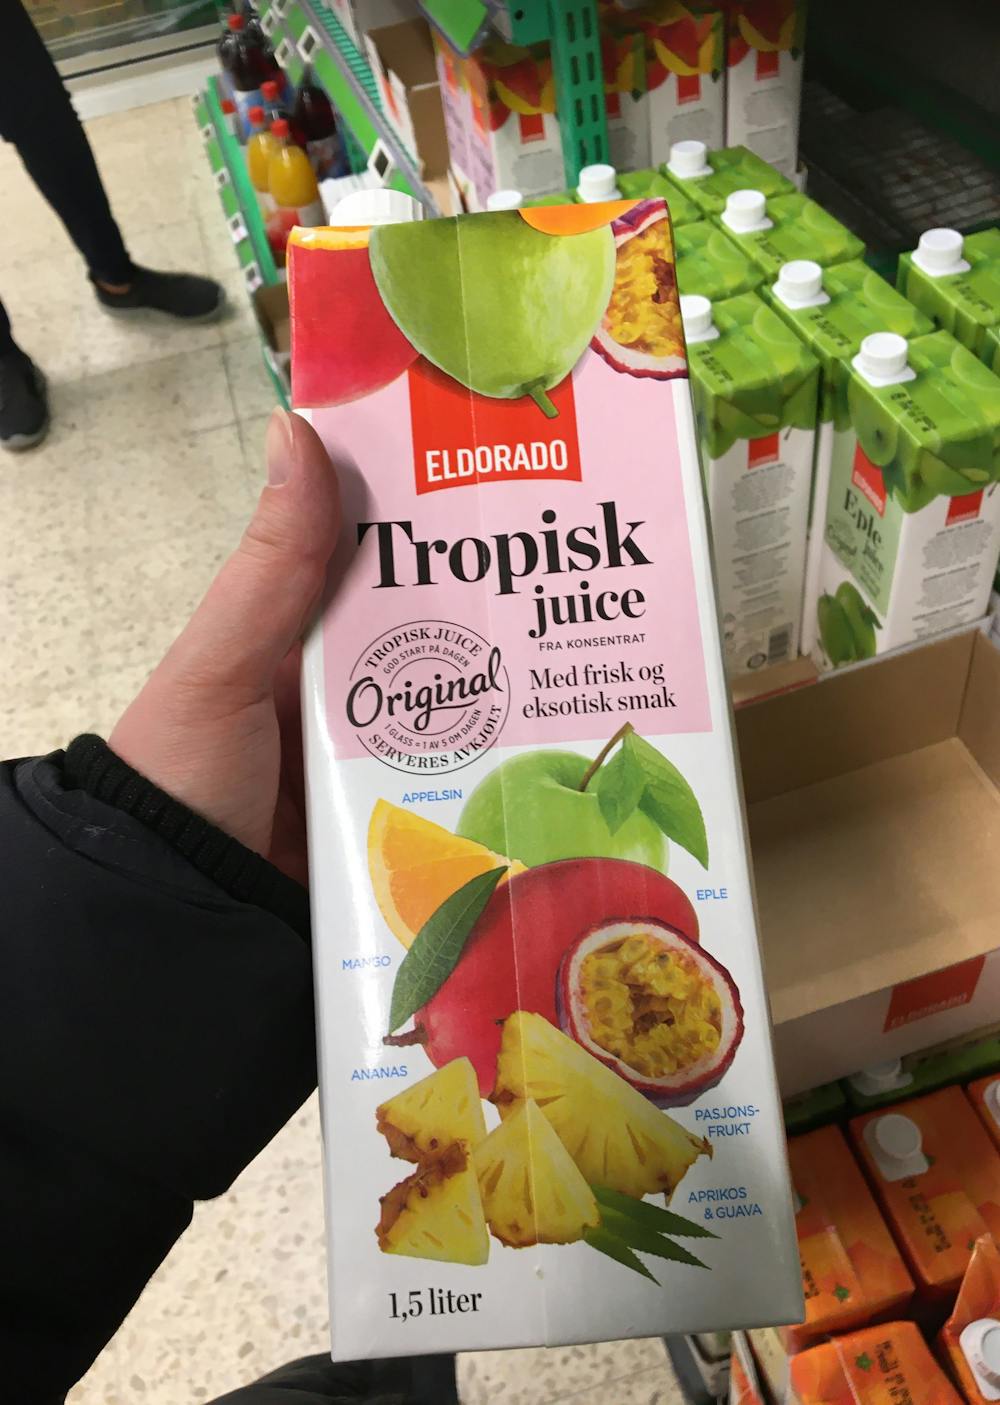 Tropisk juice, Eldorado